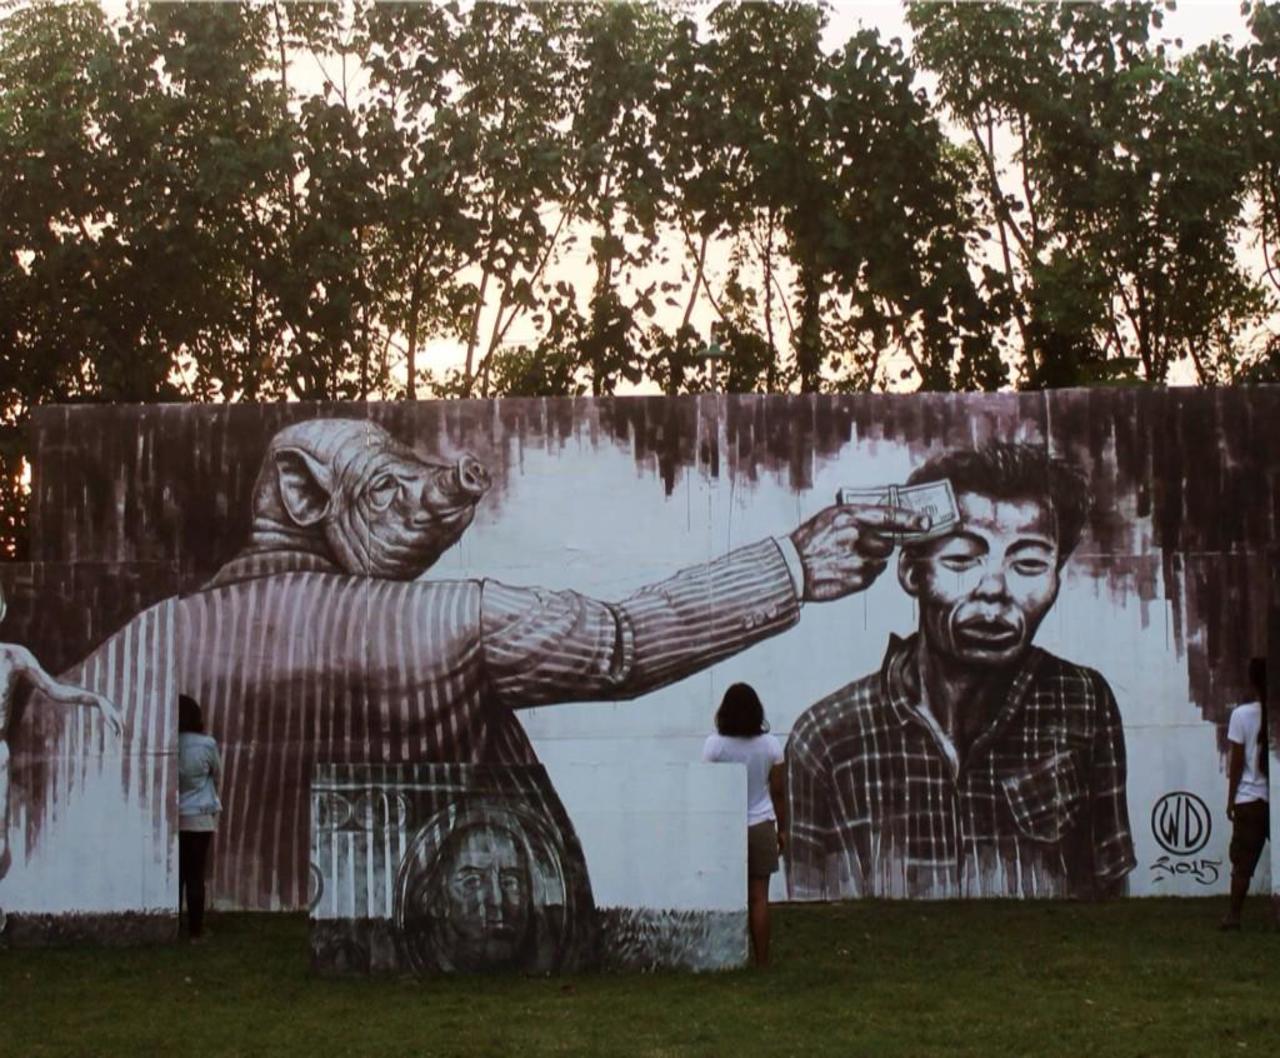 'Money Kills'
Street Art by the artist WD

#art #arte #graffiti #streetart http://t.co/162hoiFIcx